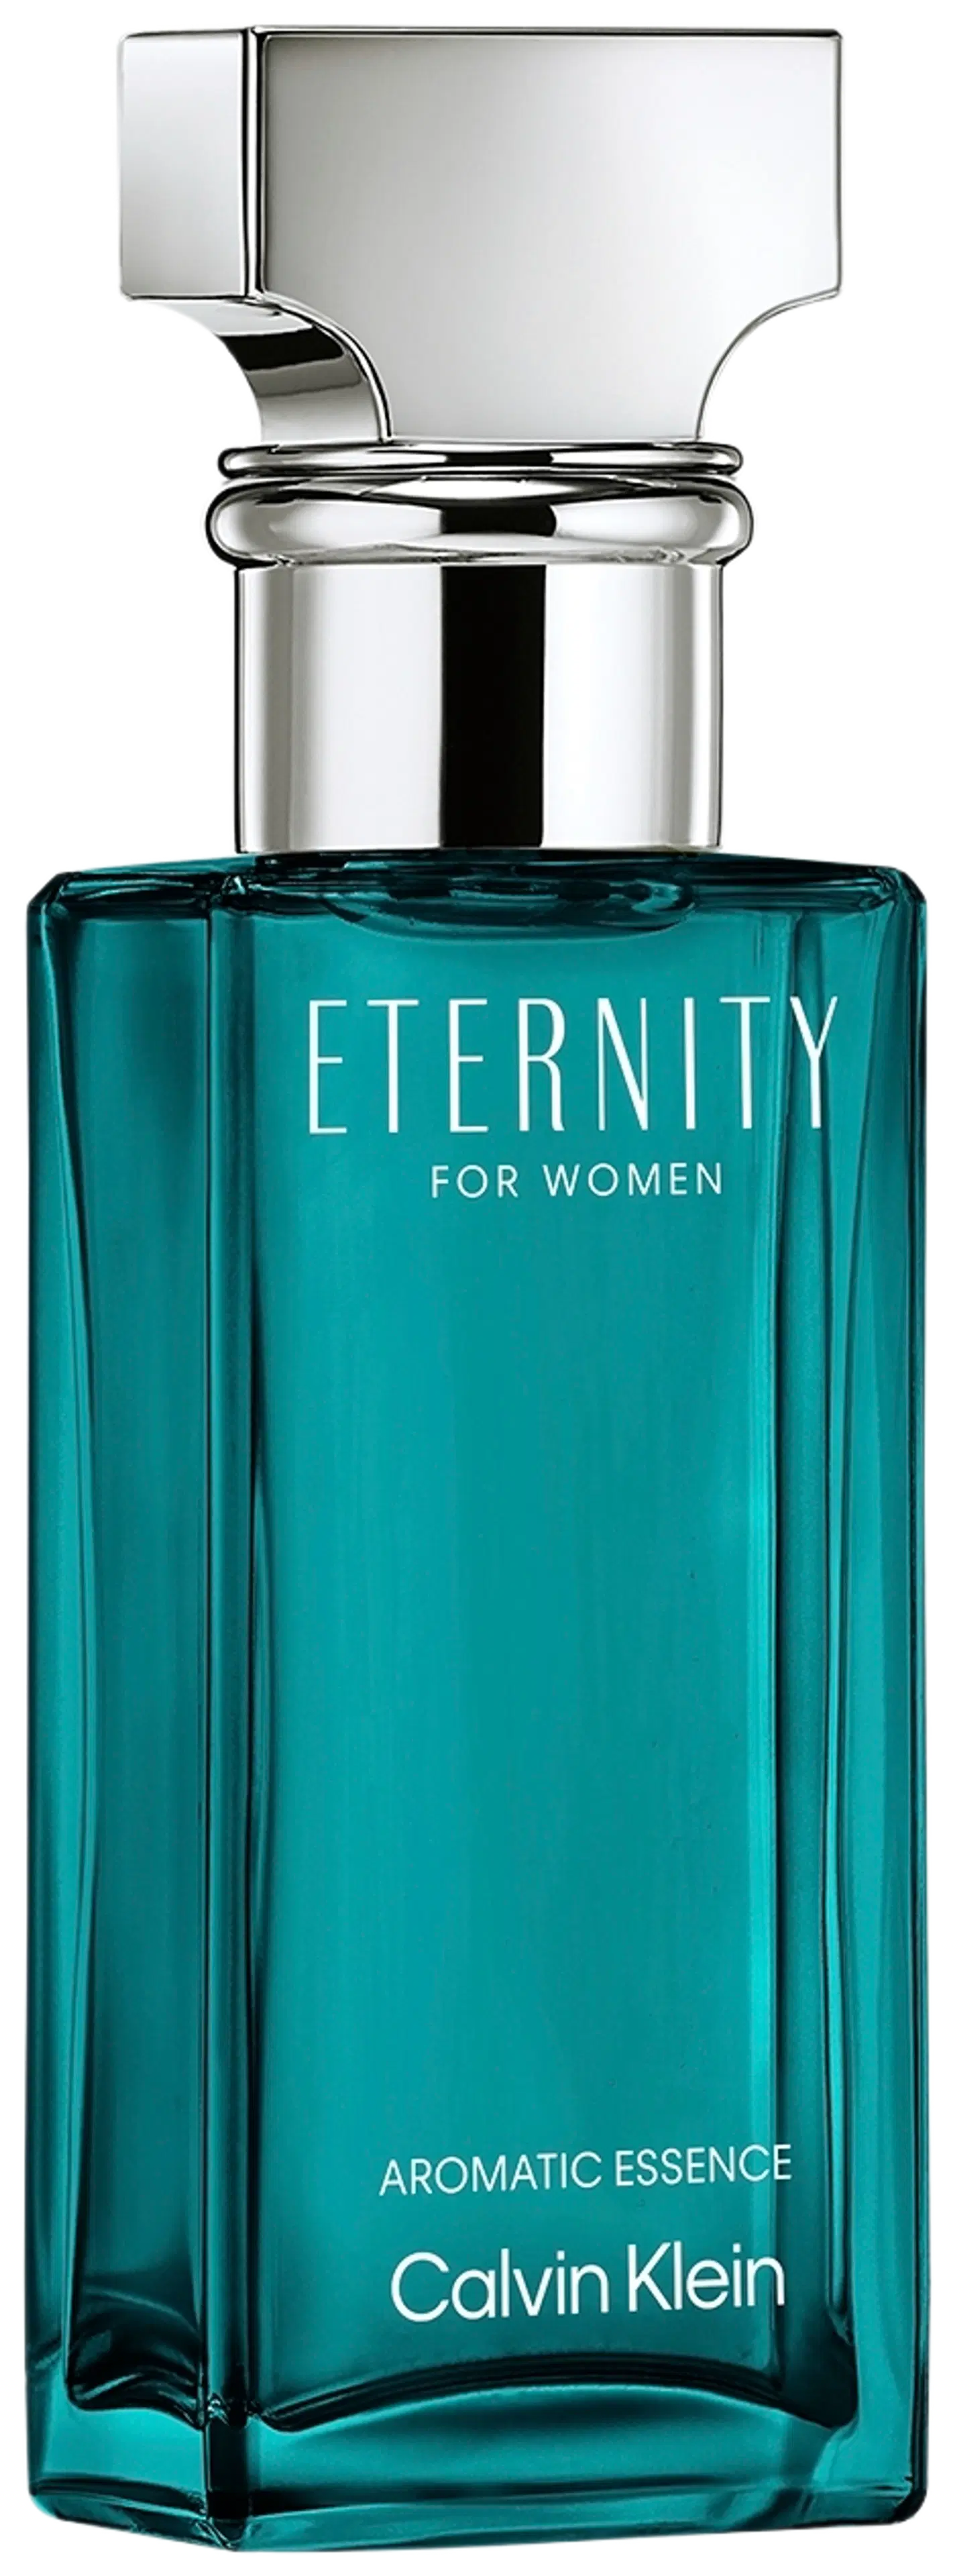 Calvin Klein Eternity aromatic essence for women 30 ml -tuoksu